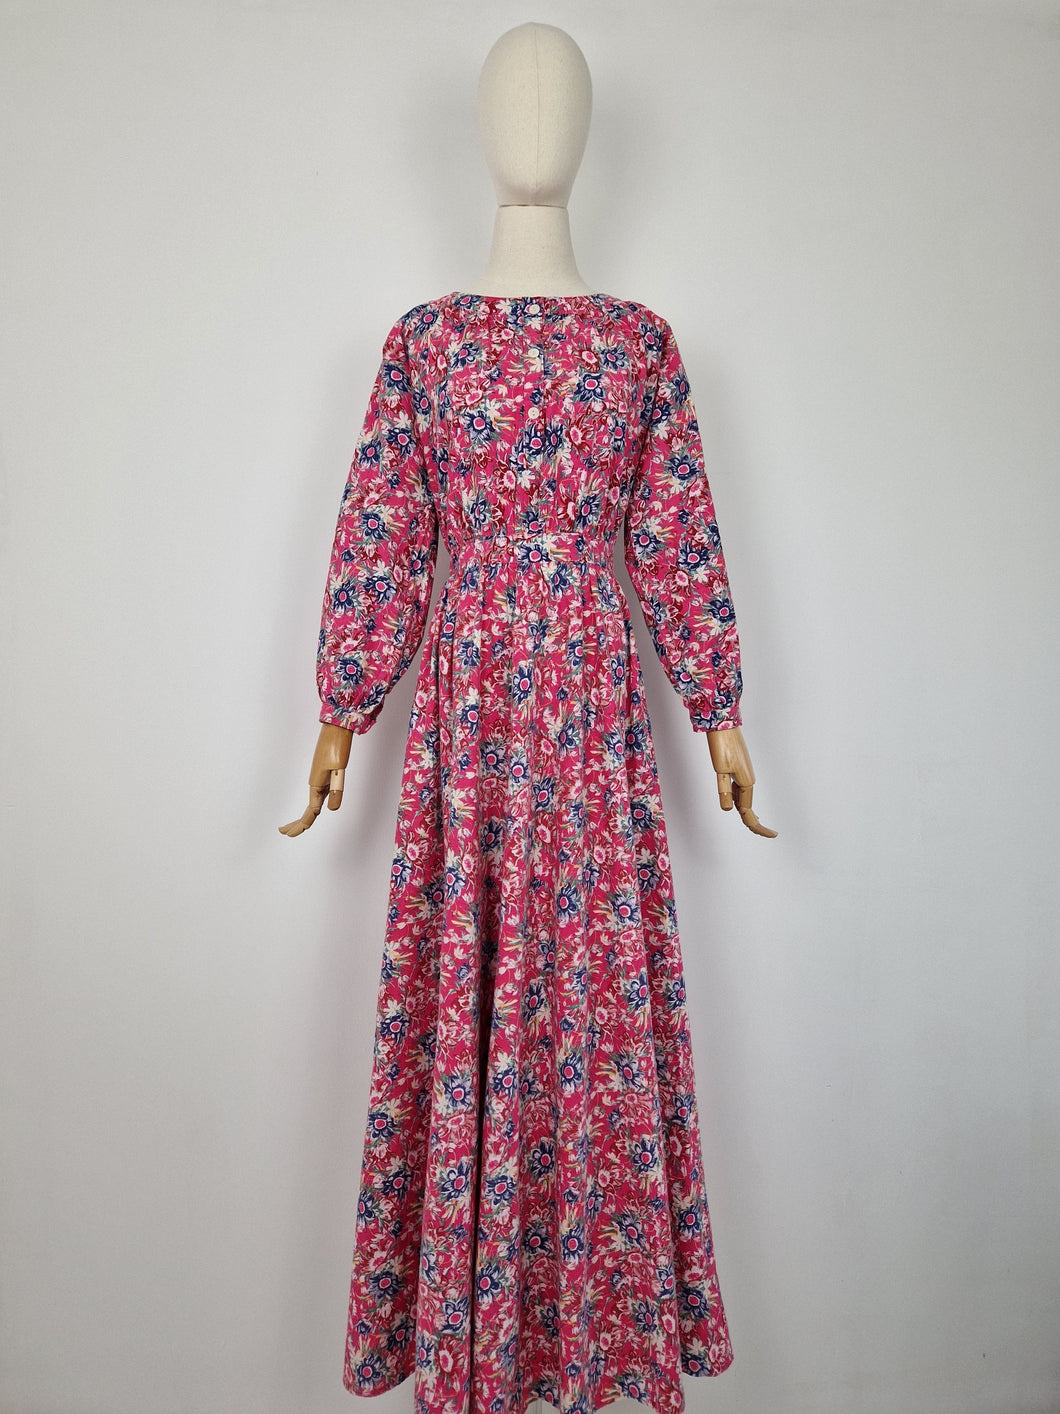 Vintage 70s Laura Ashley pink maxi dress